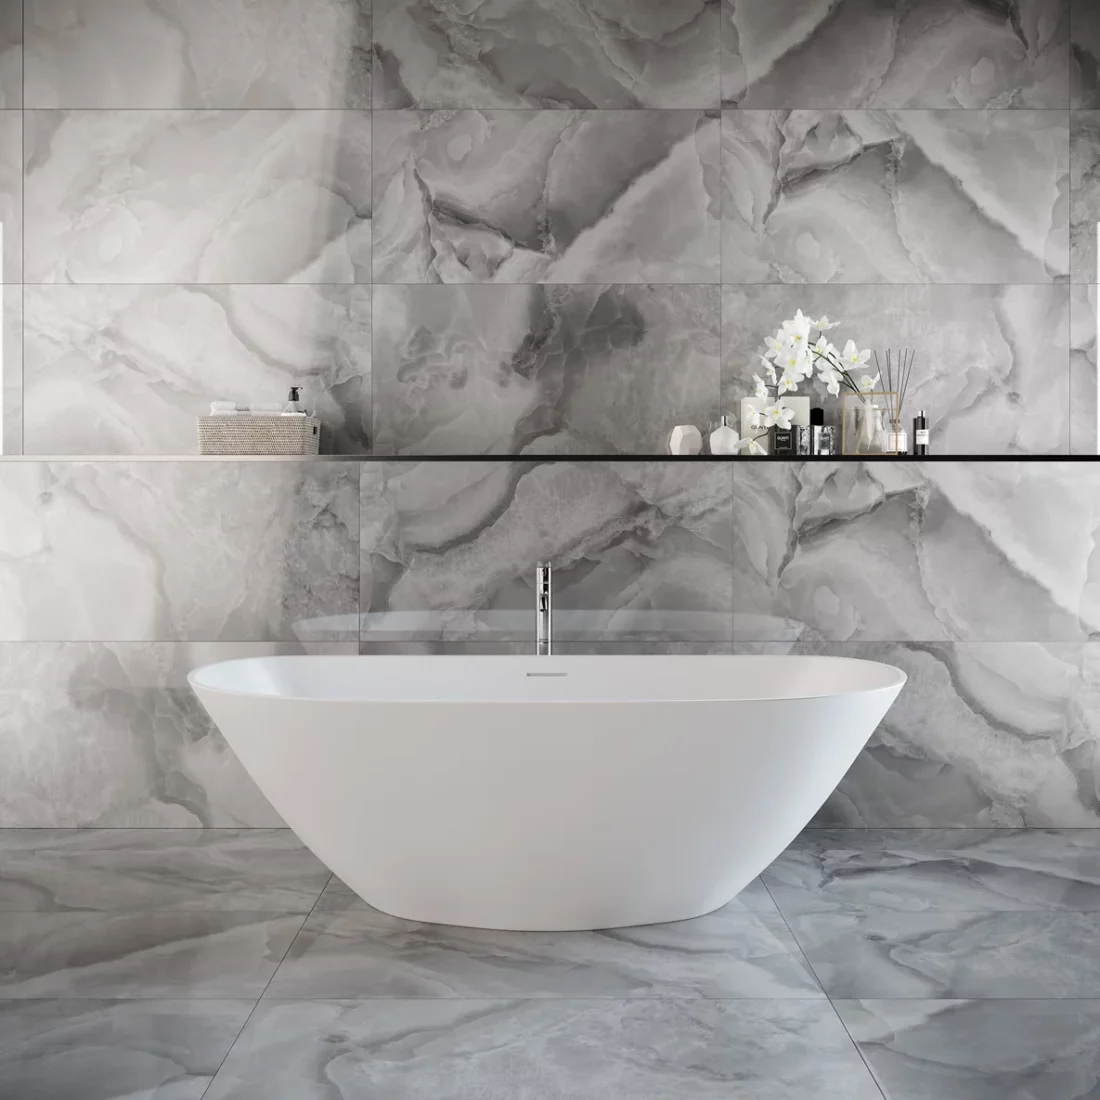 An image of a 600x1200mm dark onyx grey effect porcelain tile in a modern bathroom setting with a white bath.